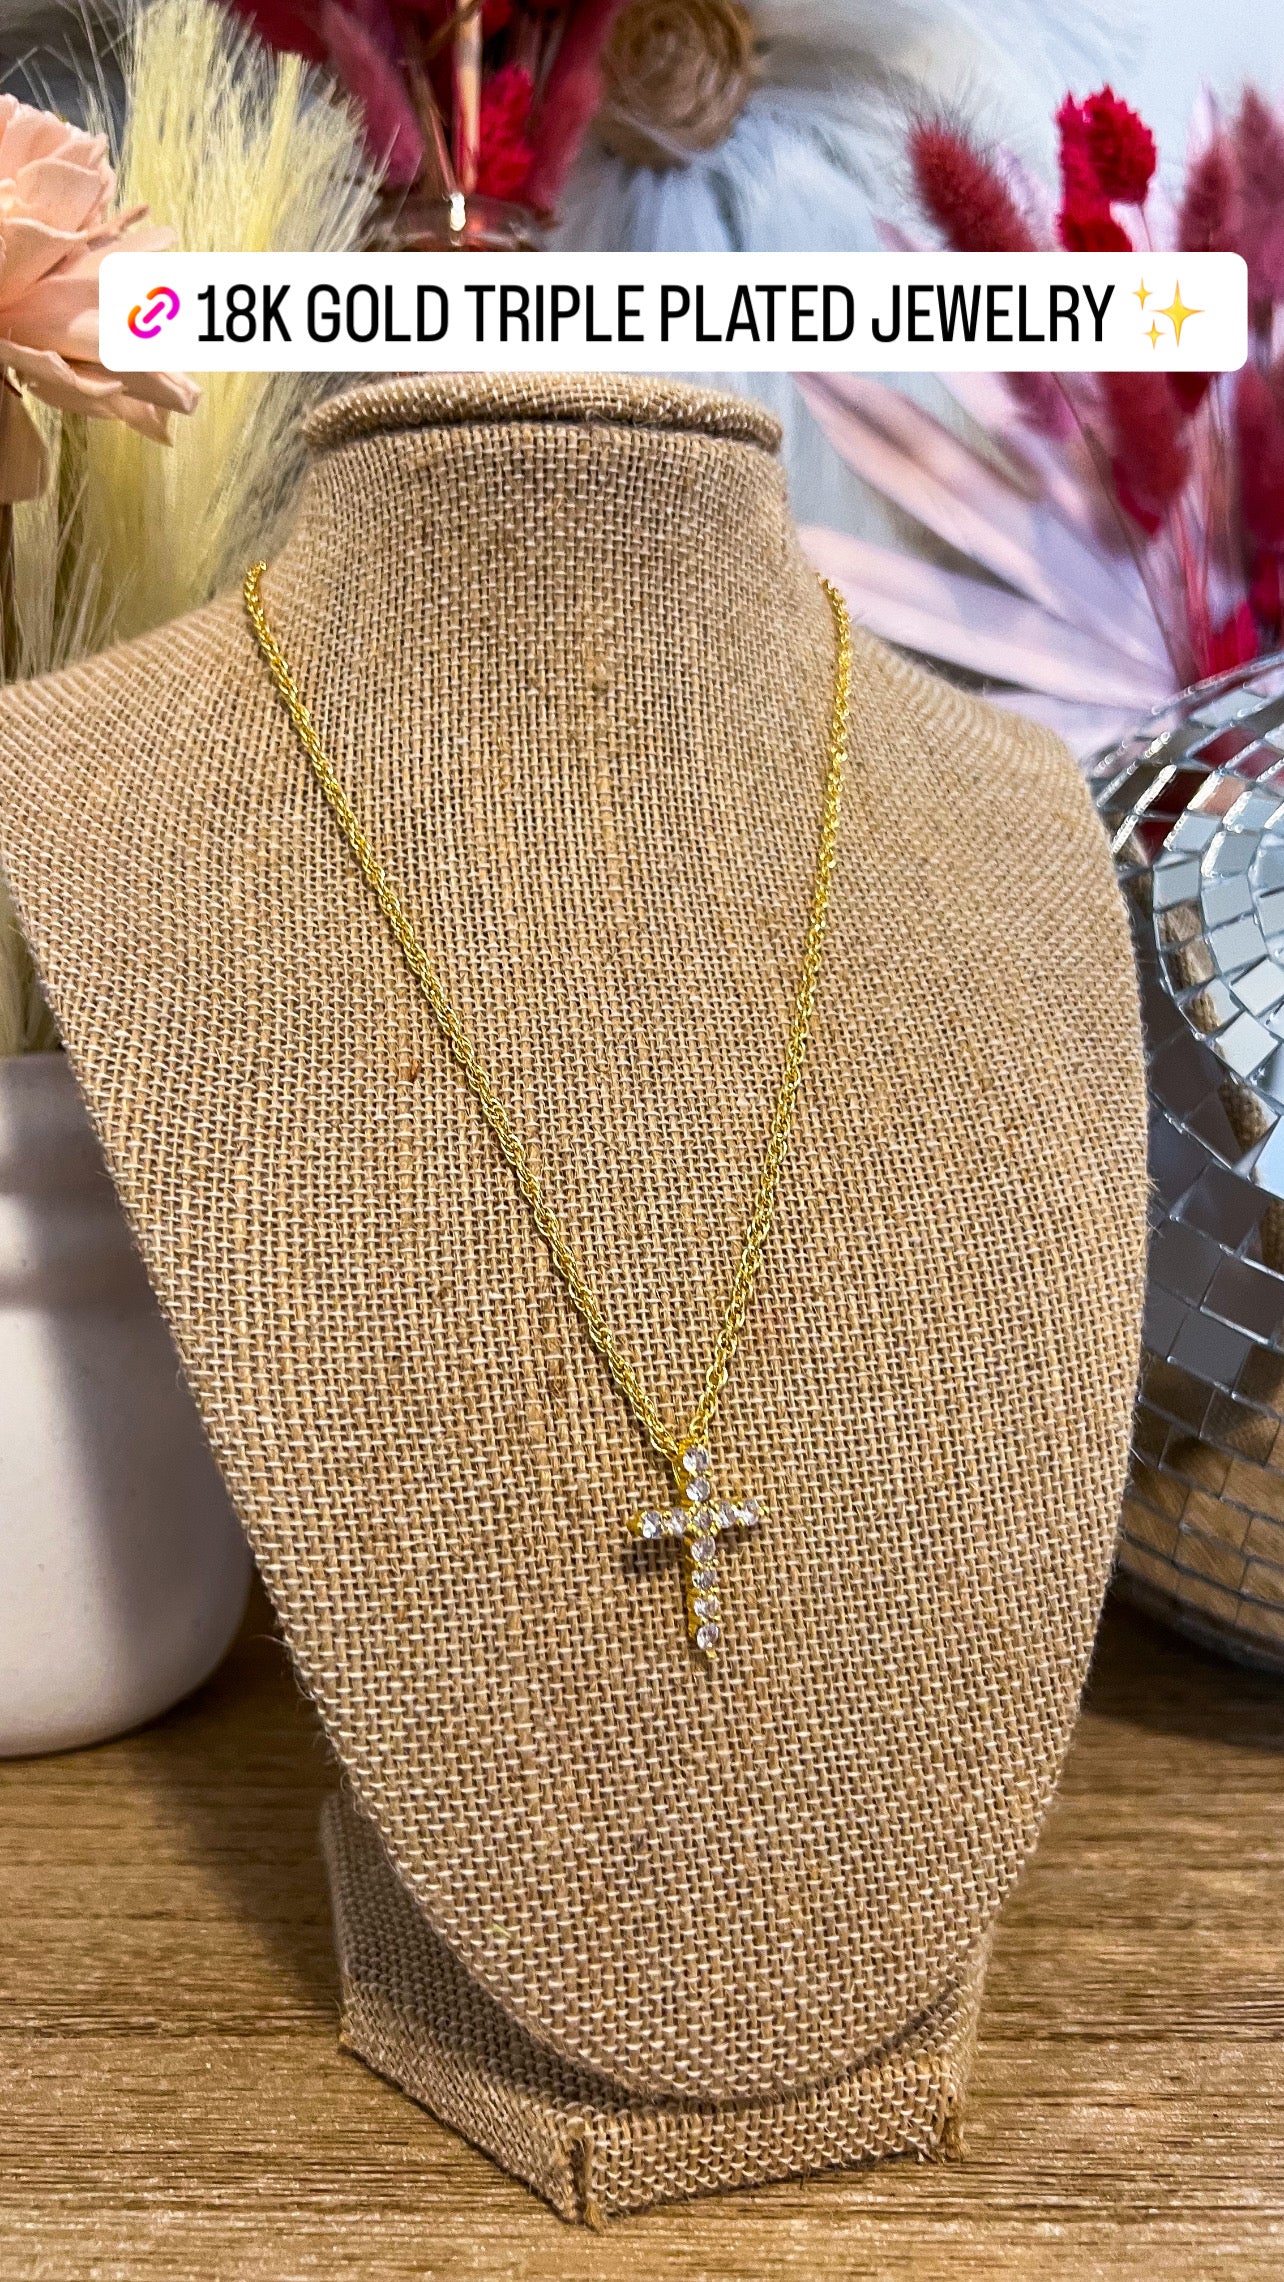 Cross 18K Gold Necklace